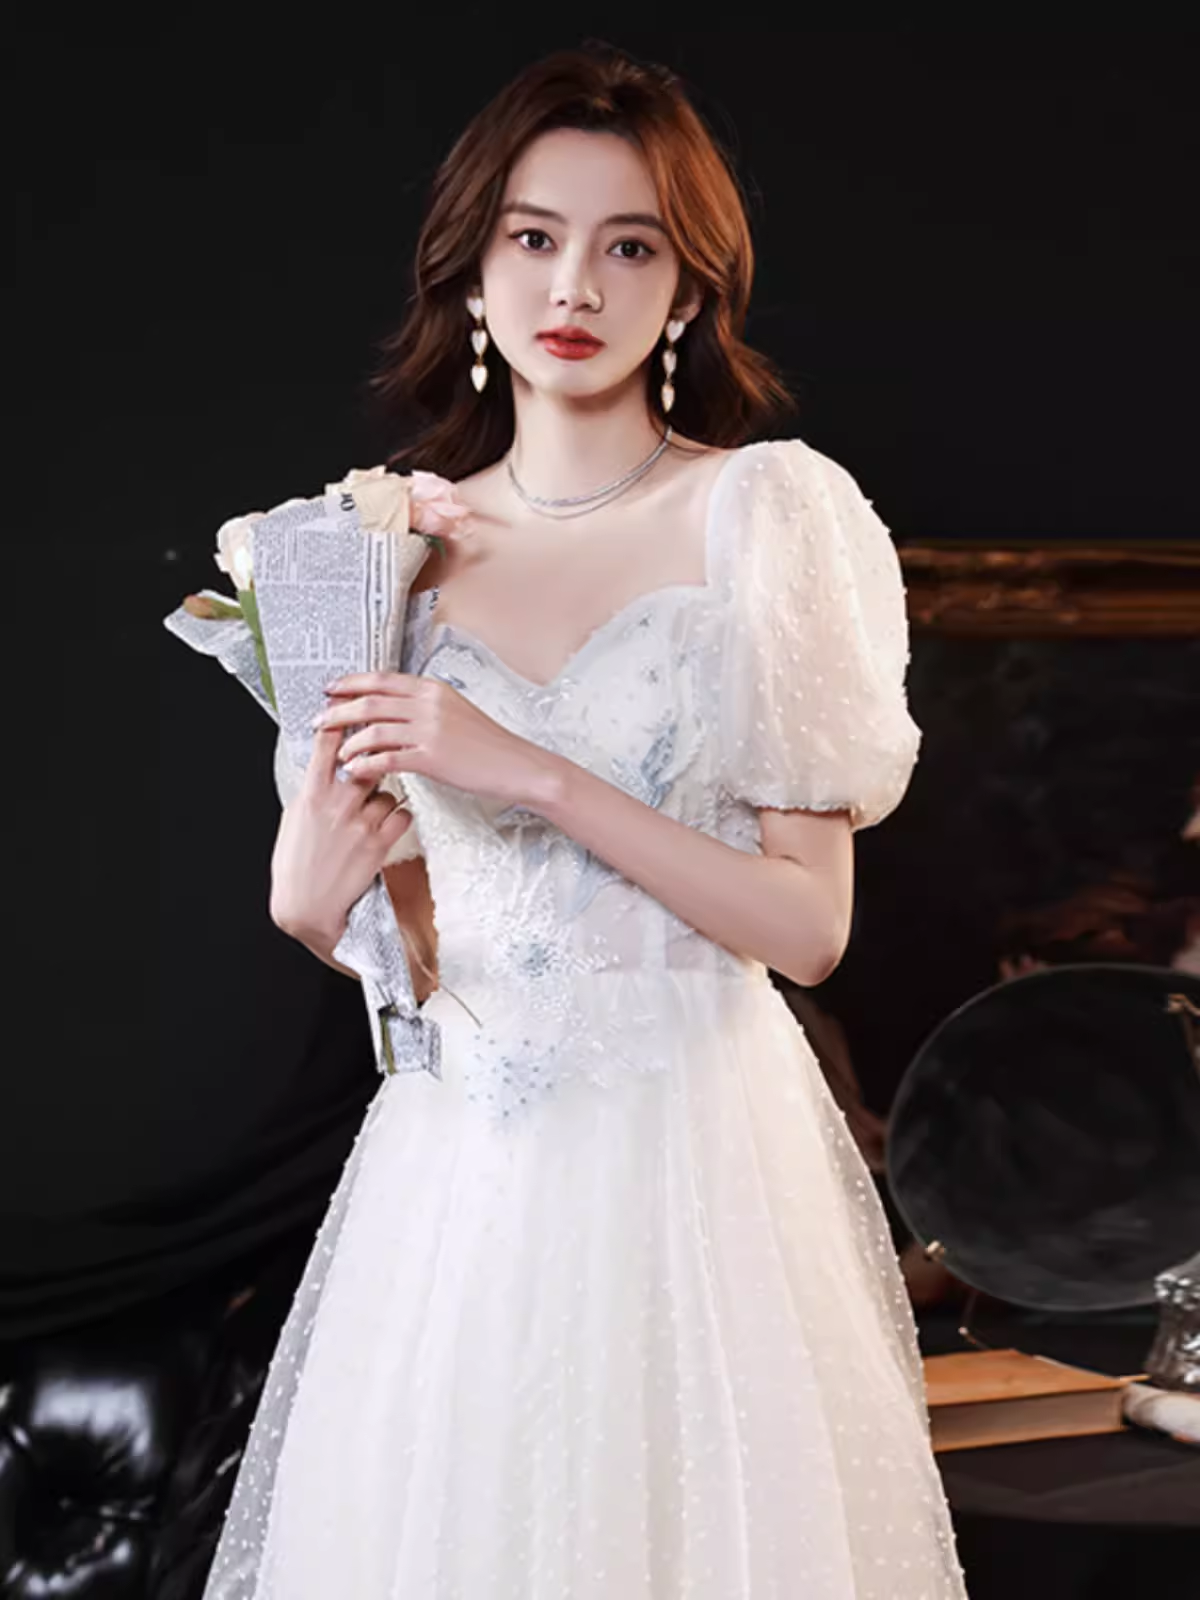 Cute A line Short Sleeves White Long Prom Dress B678